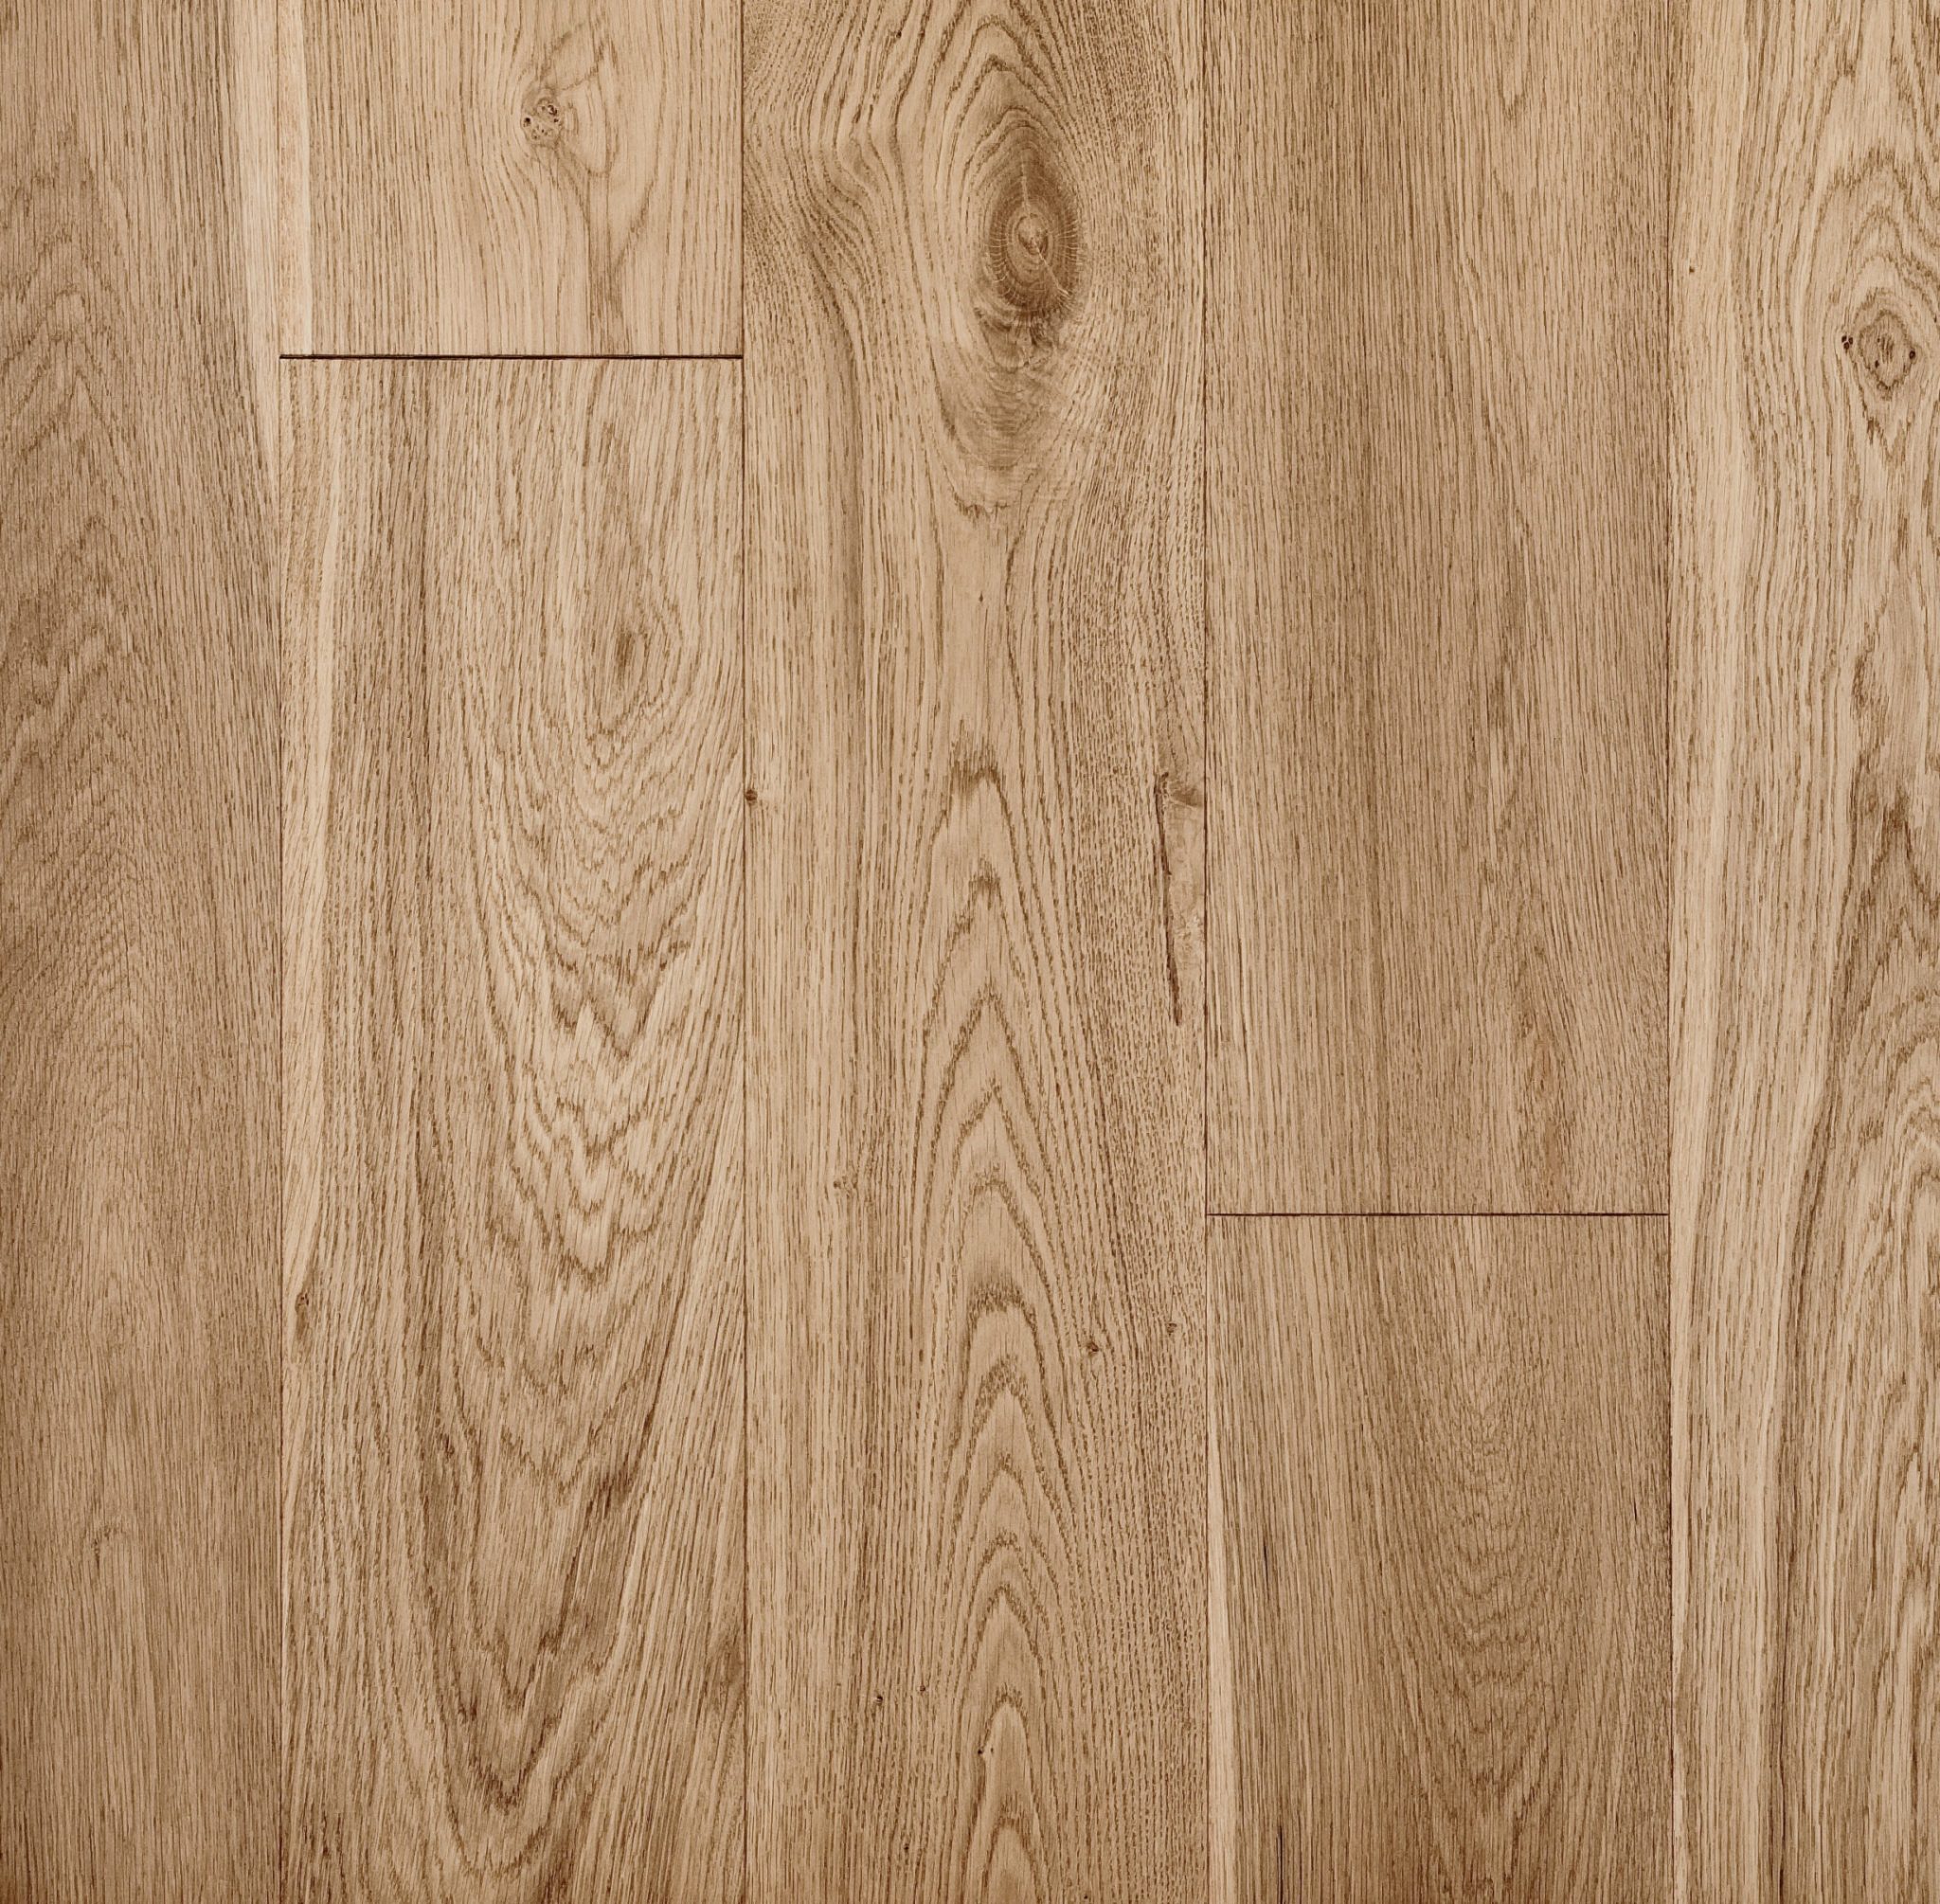 Multiply oak wood flooring named Essence Afternoon Shadows